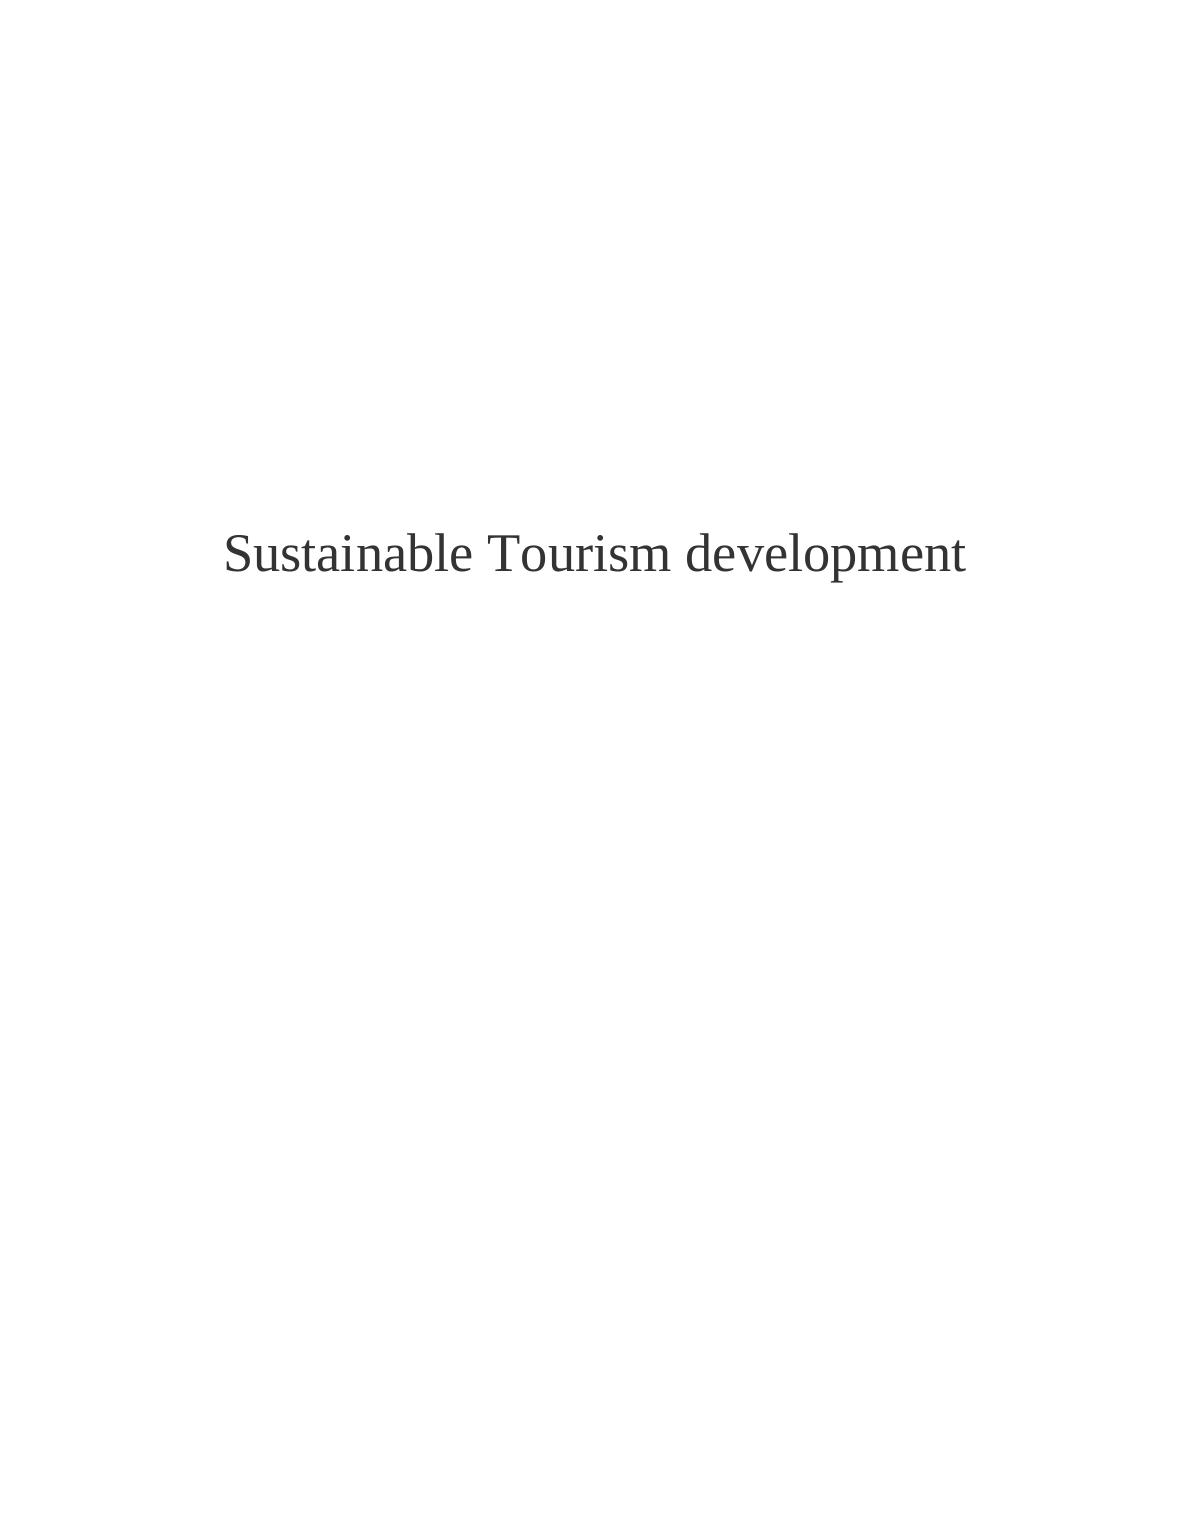 Sustainable Tourism Development Industry - PDF_1